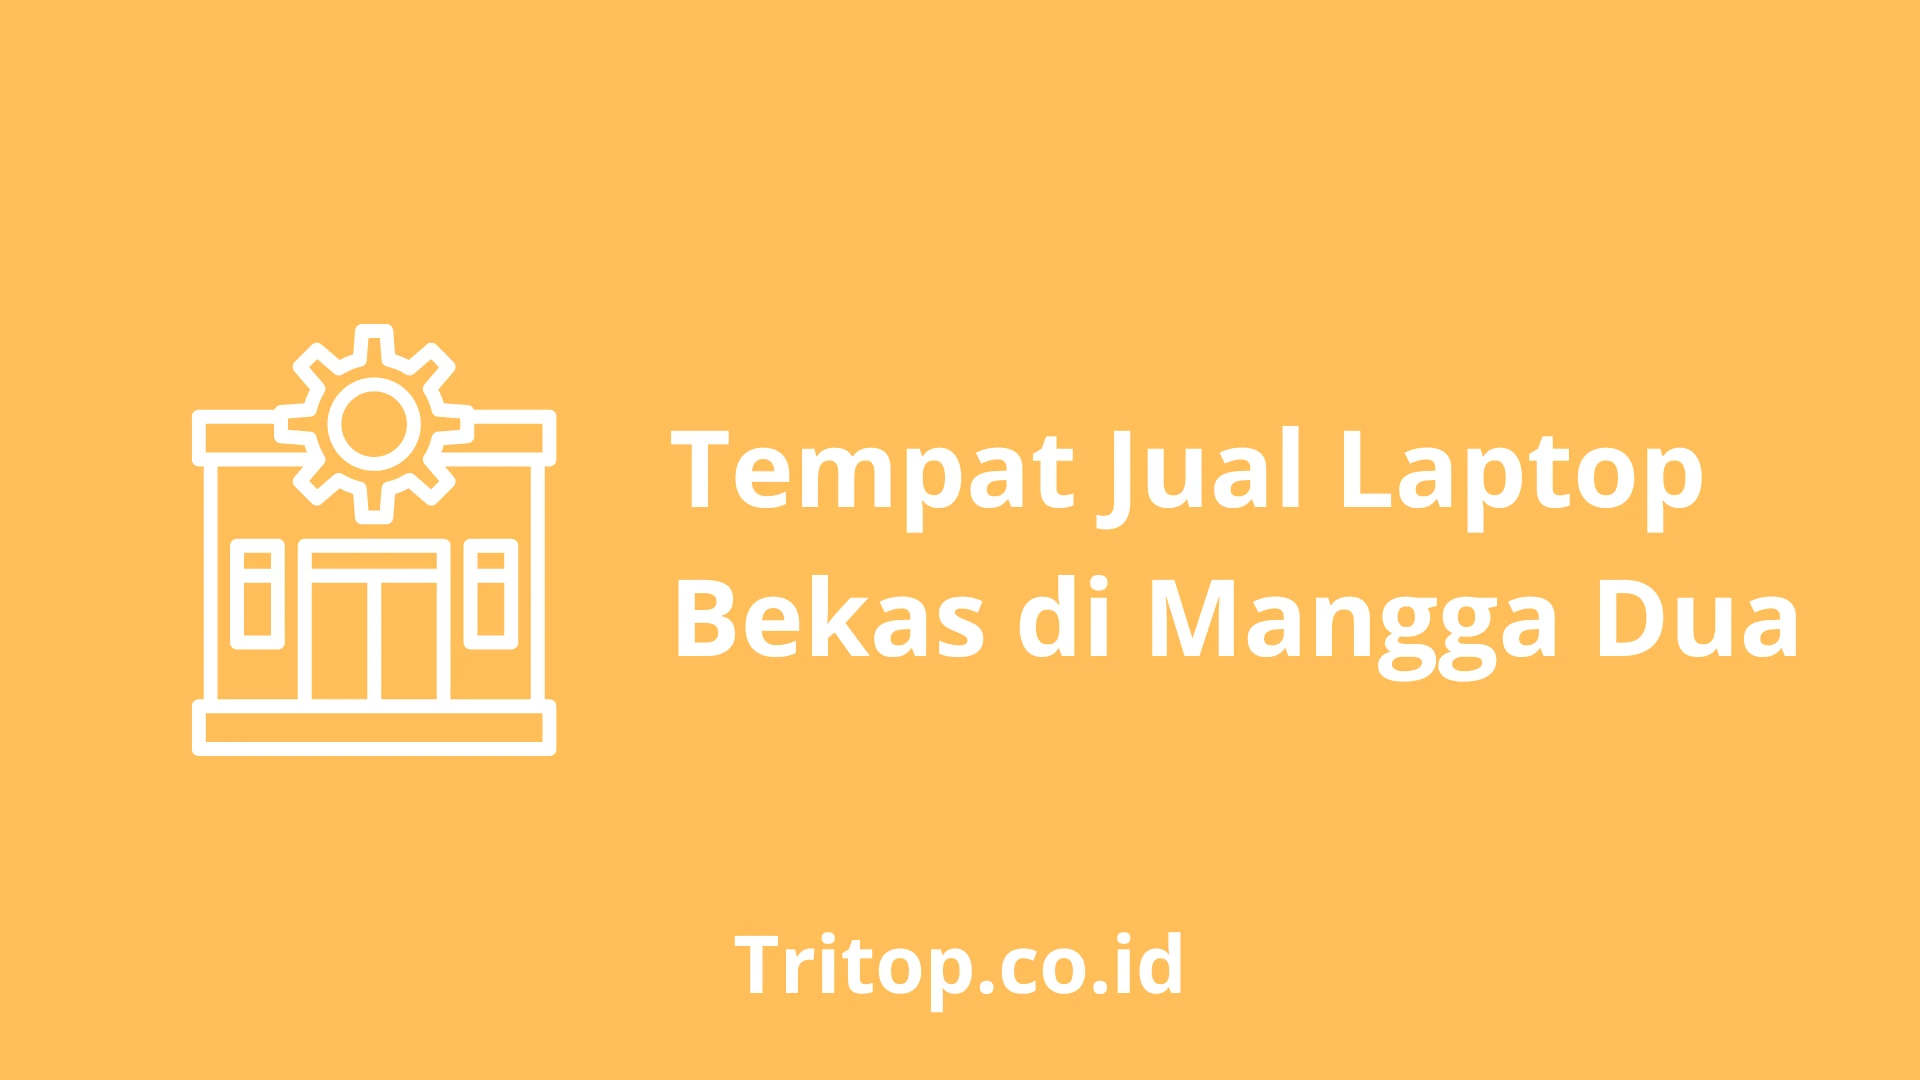 Tempat Jual Laptop Bekas di Mangga Dua tritop.co.id